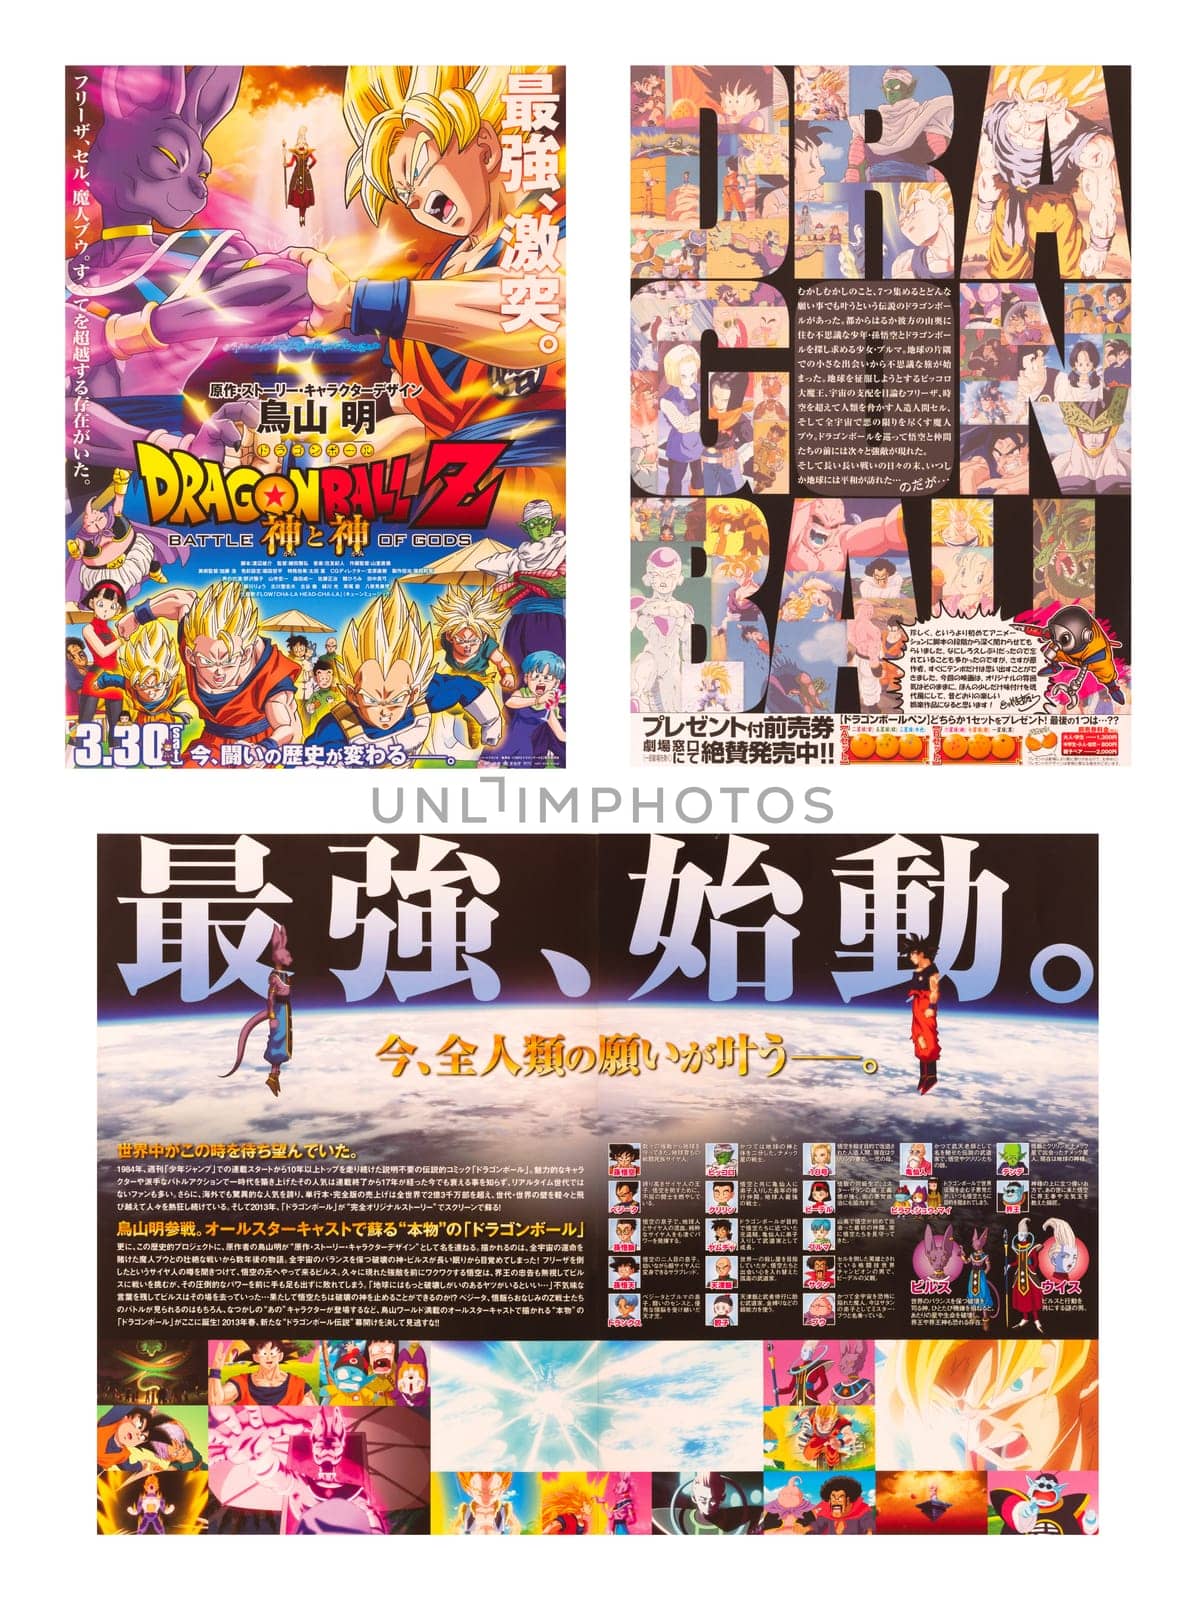 2nd teaser visual design leaflet of the 2013 anime film "Dragon Ball Z: Battle of Gods". by kuremo